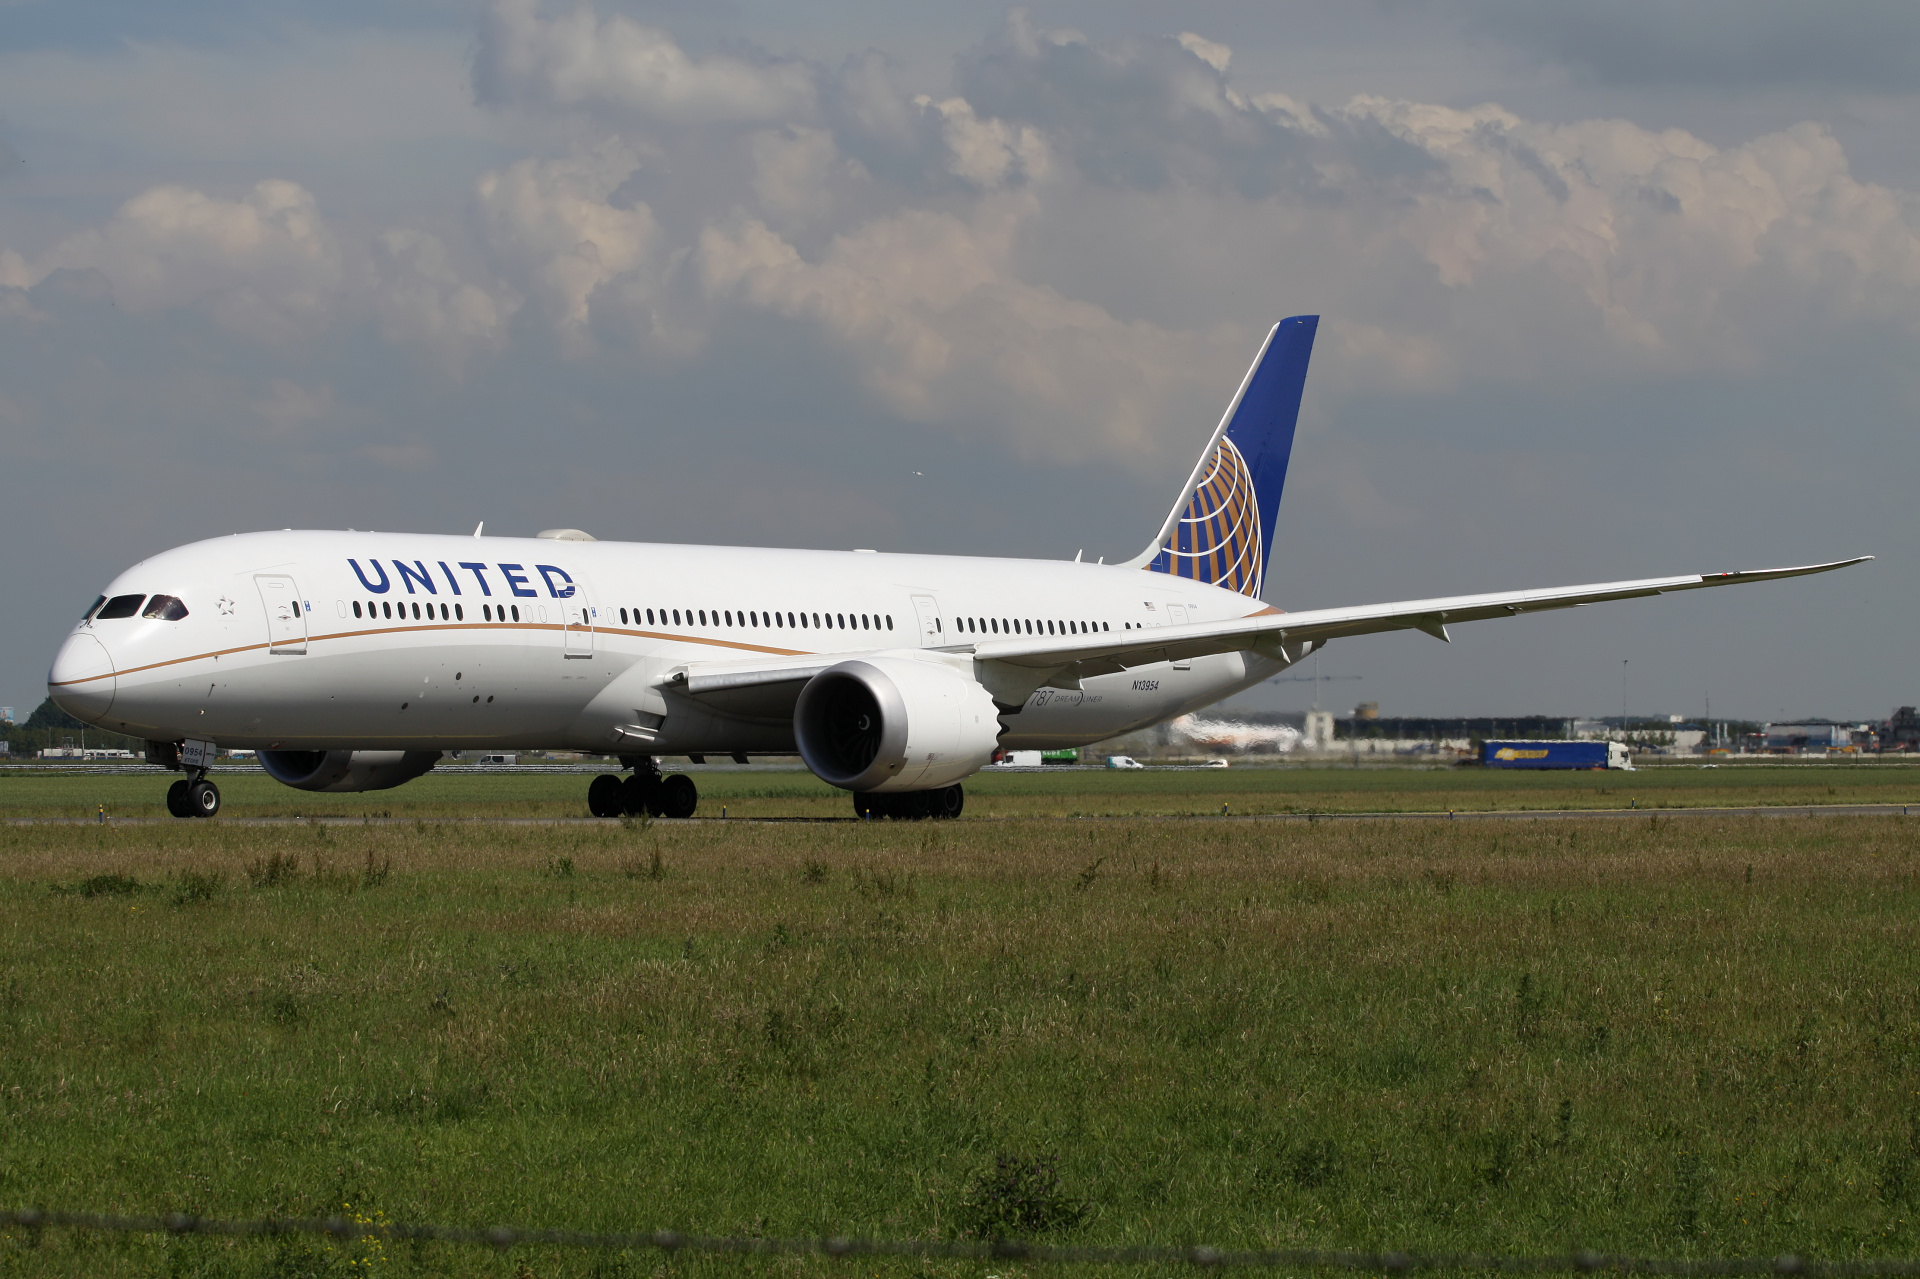 N13954, United Airlines (Aircraft » Schiphol Spotting » Boeing 787-9 Dreamliner)